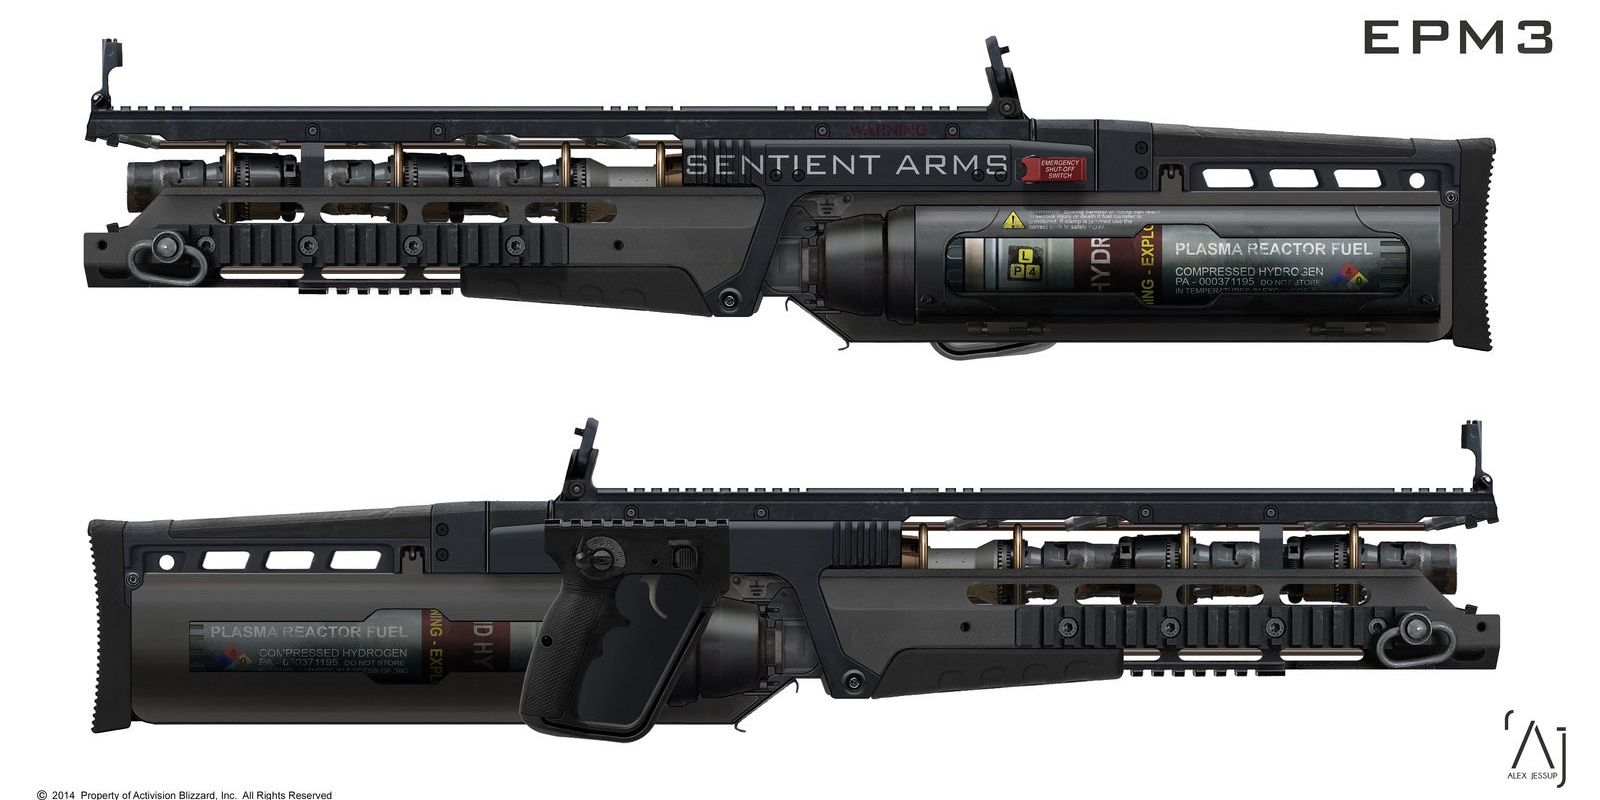 Call of Duty Advanced Warfare concept art for EPM3 rifle.